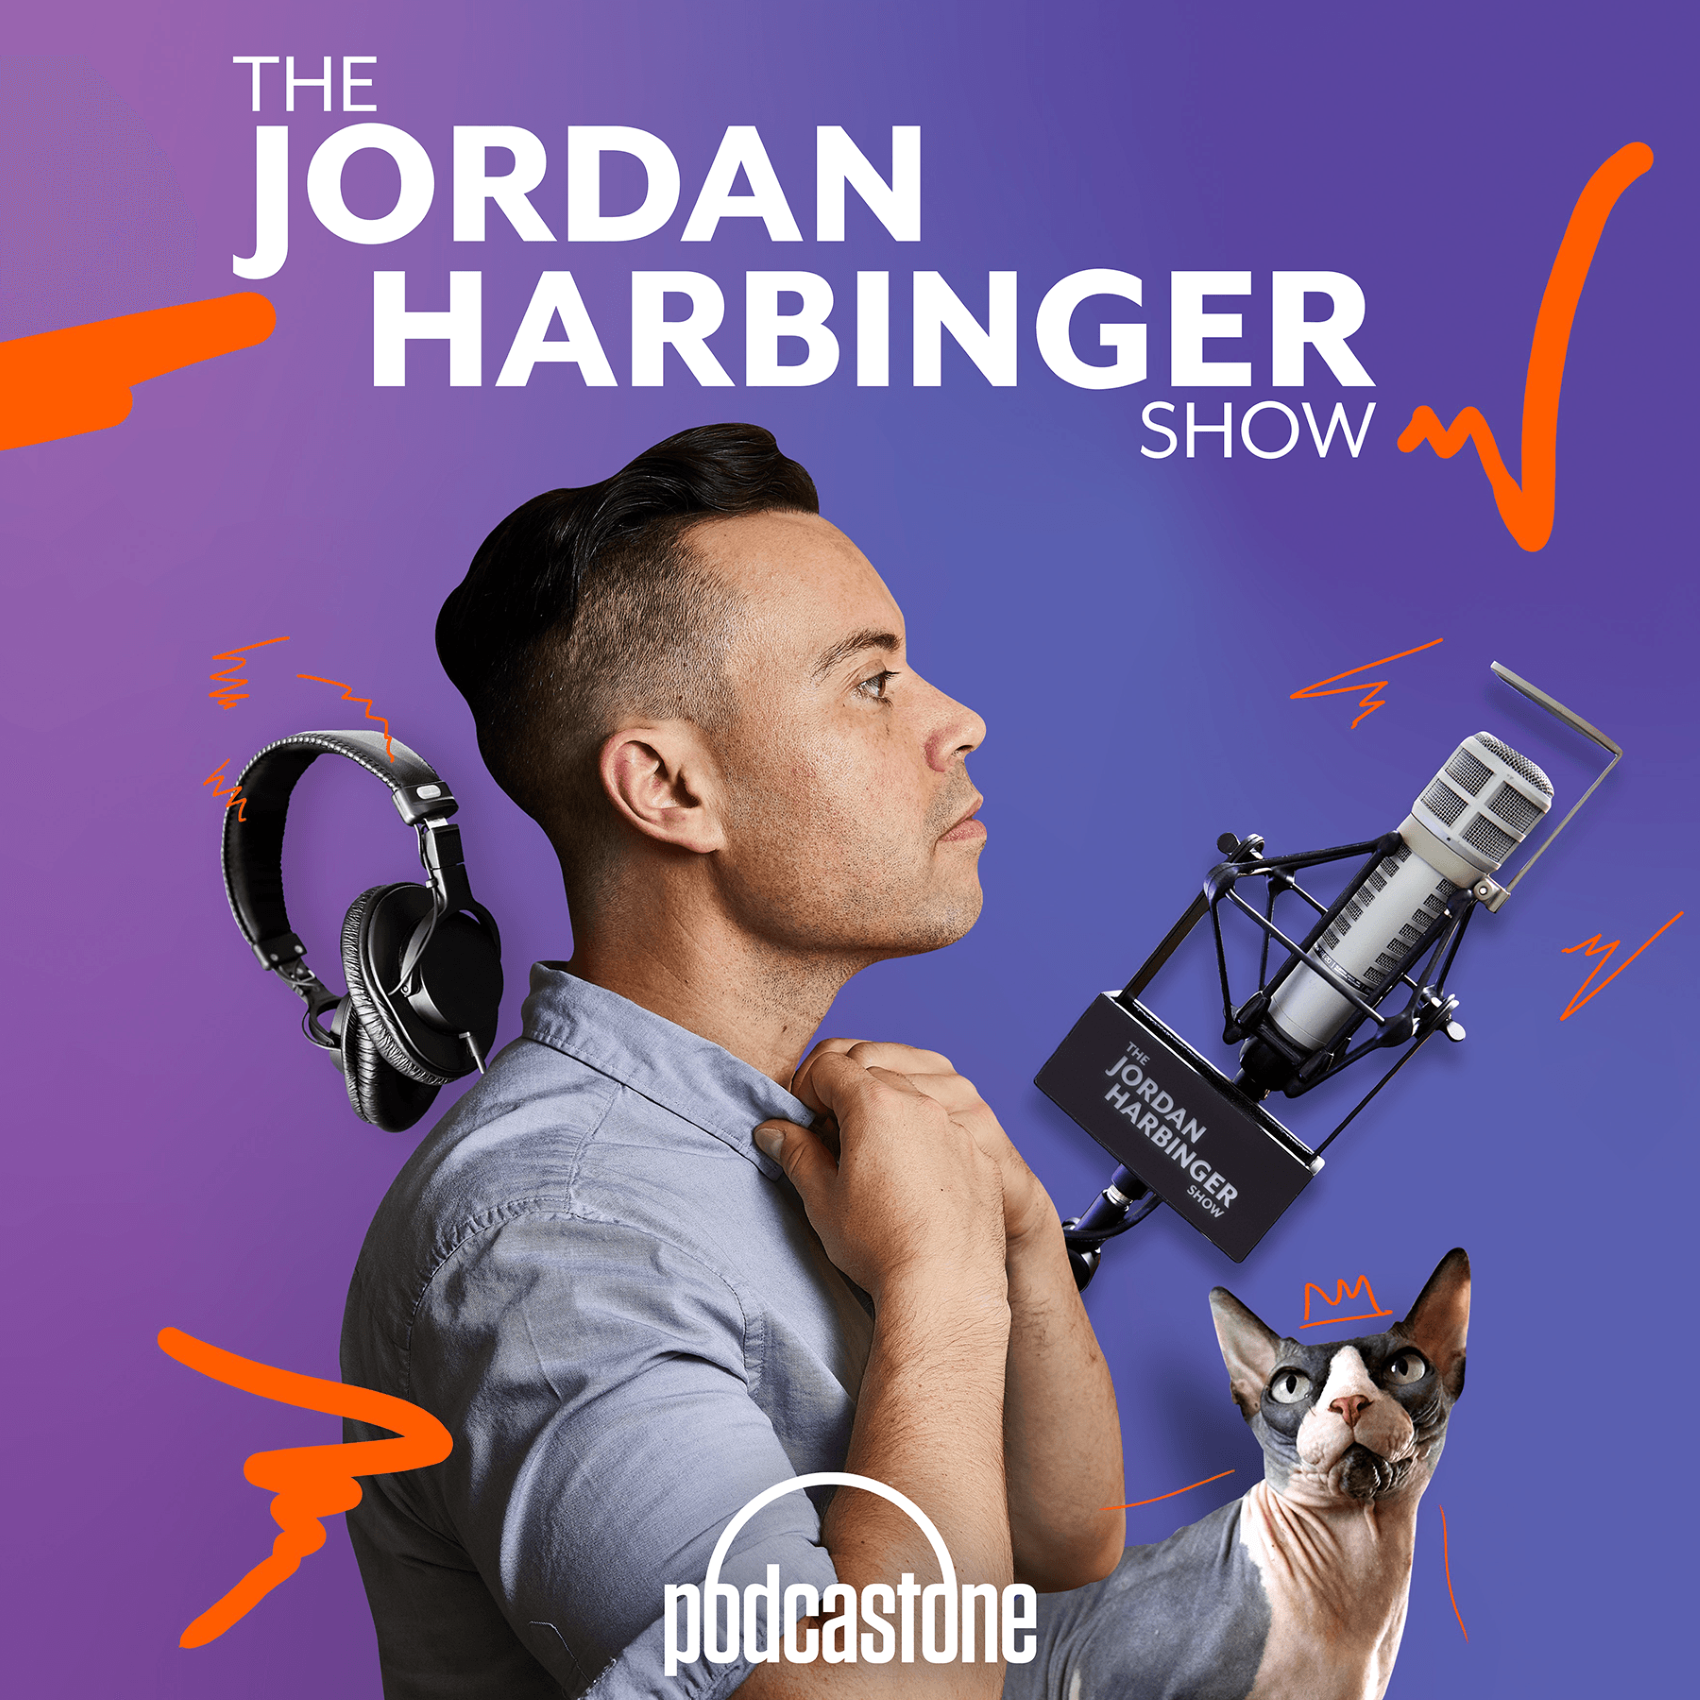 Advertise on The Jordan Harbinger Show with AudioGO